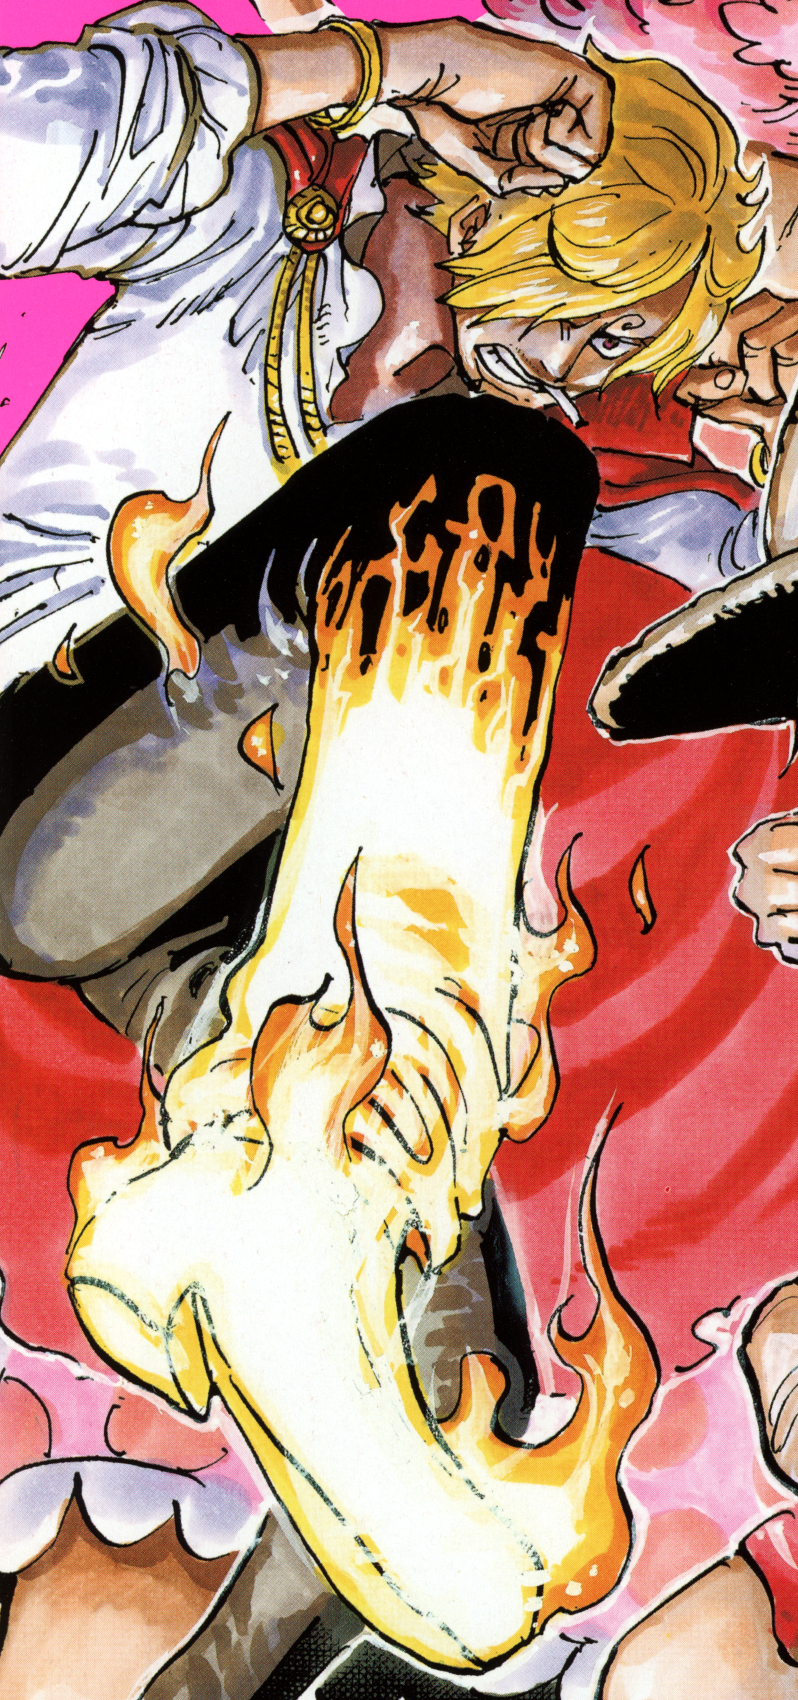 Black Leg Sanji - One Piece -Artwork by @EosVisions